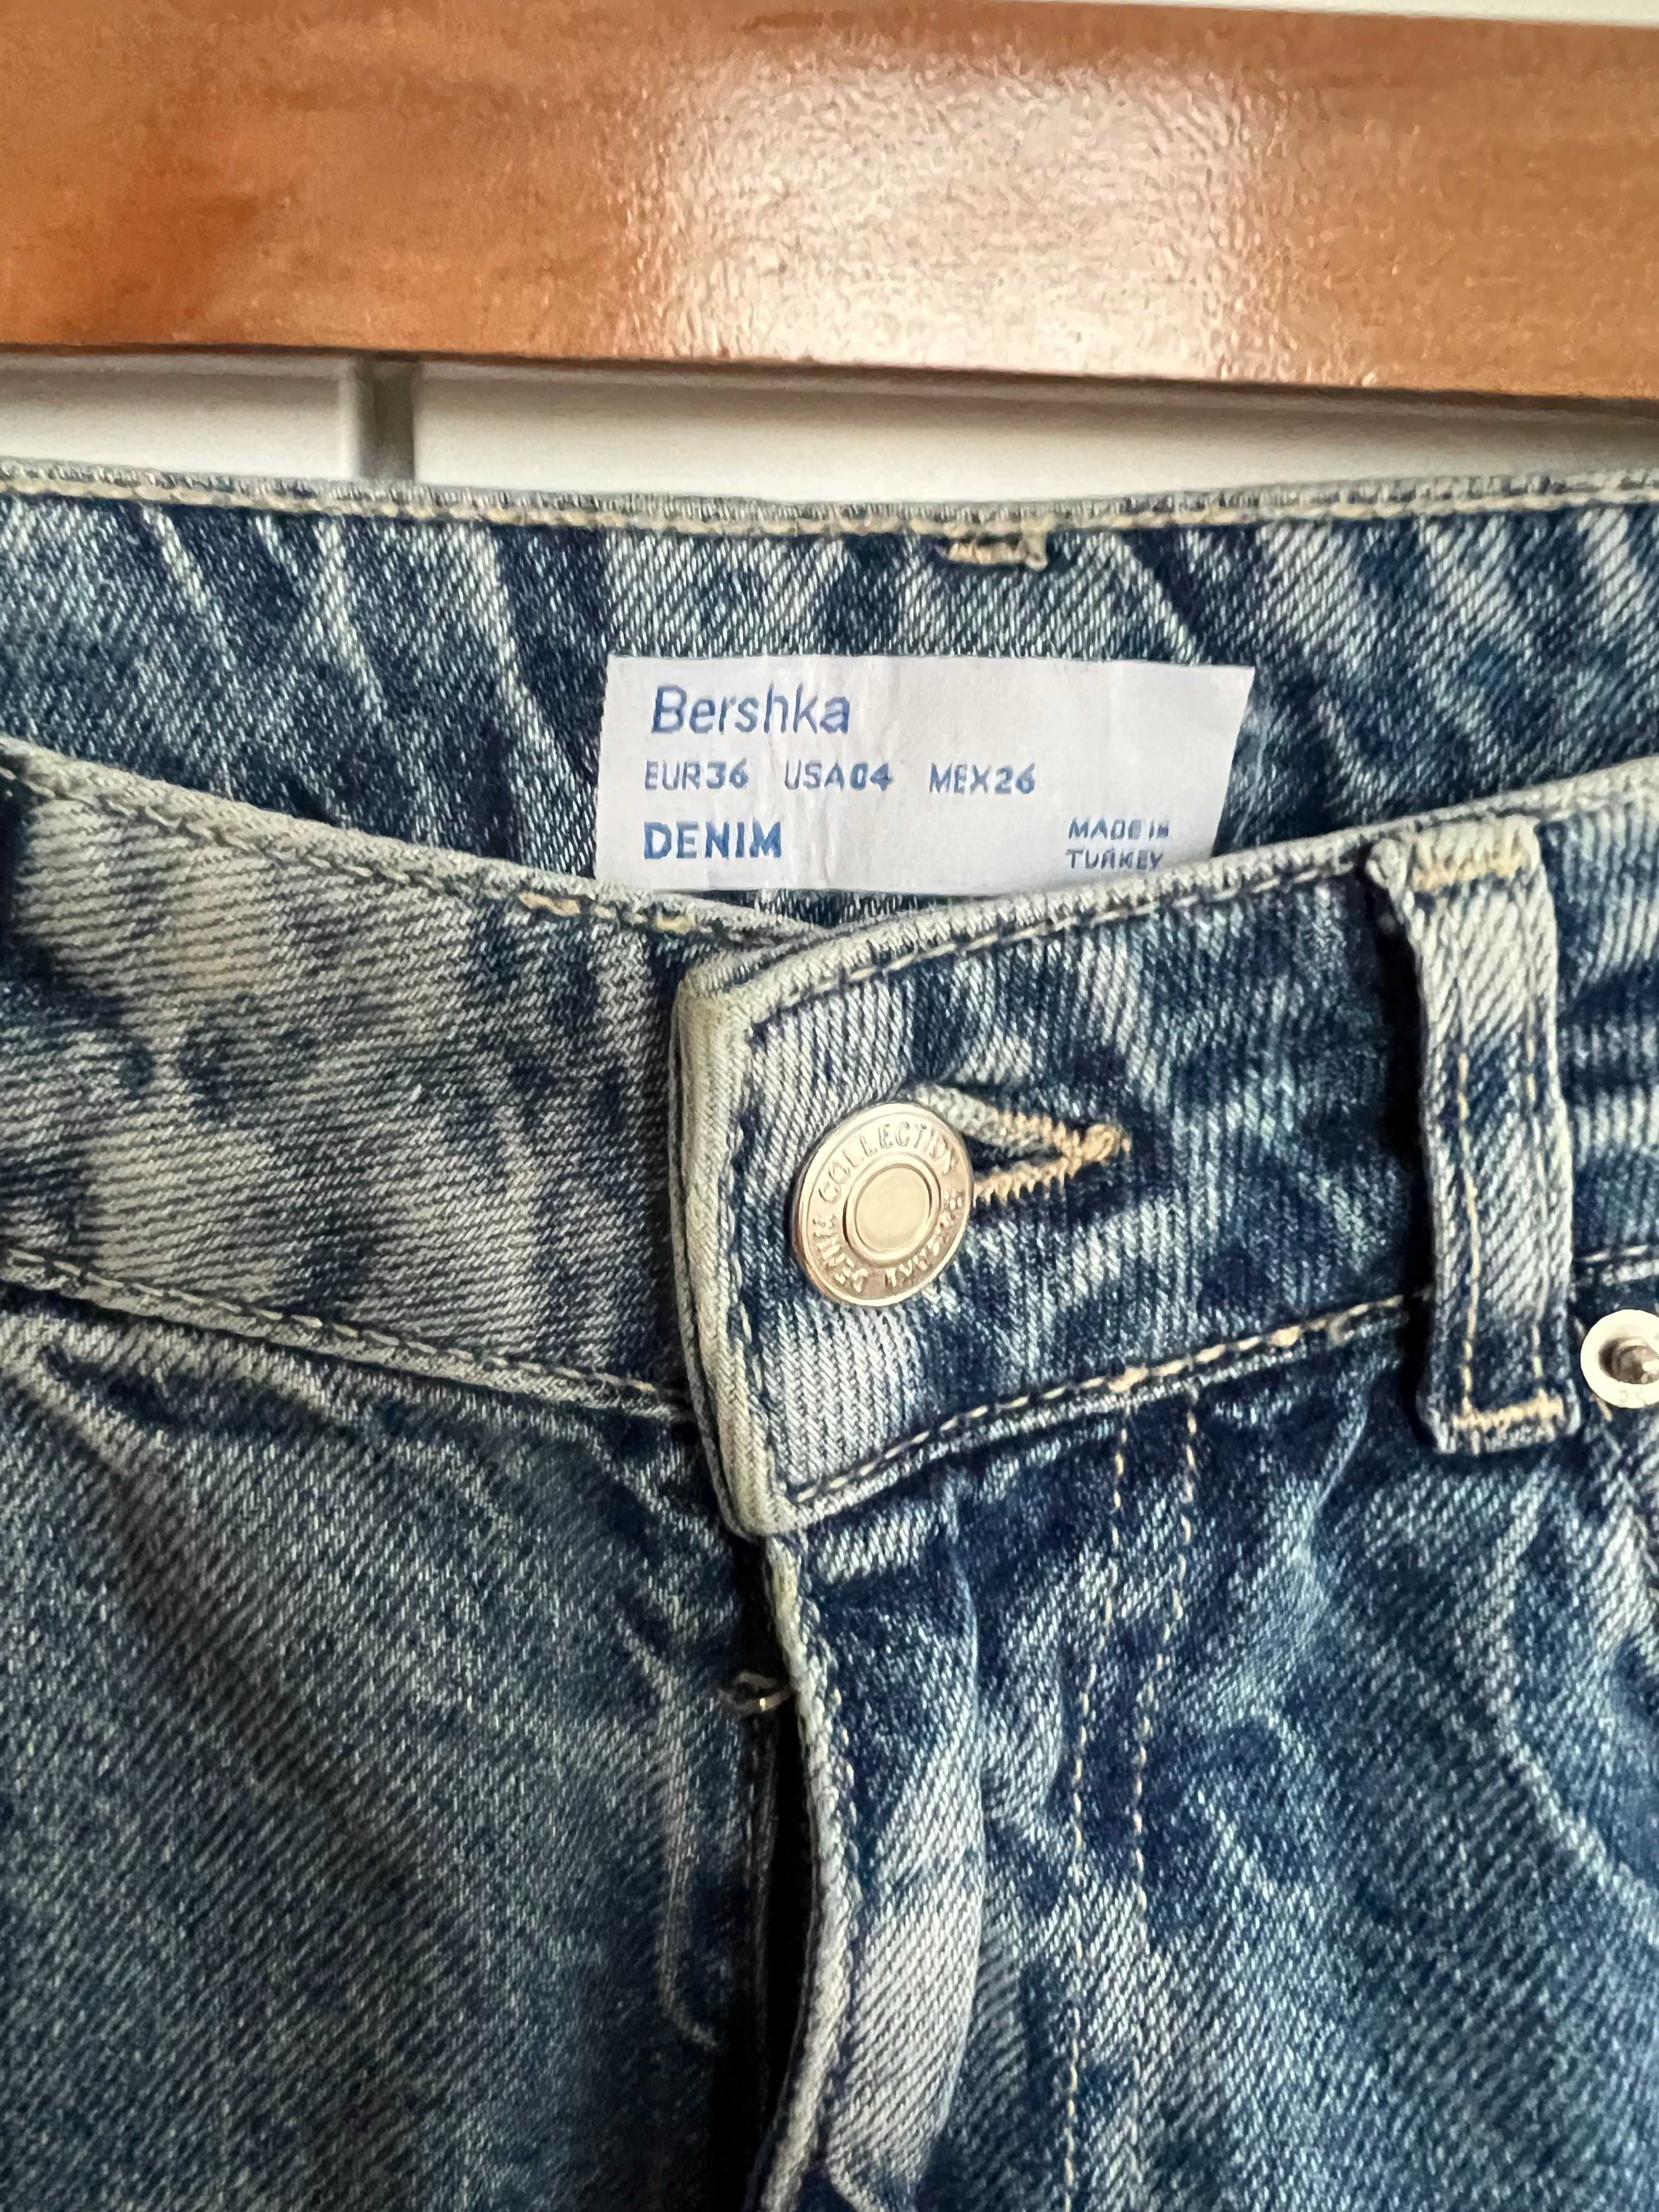 Spodnie jeansowe DENIM Bershka r.36